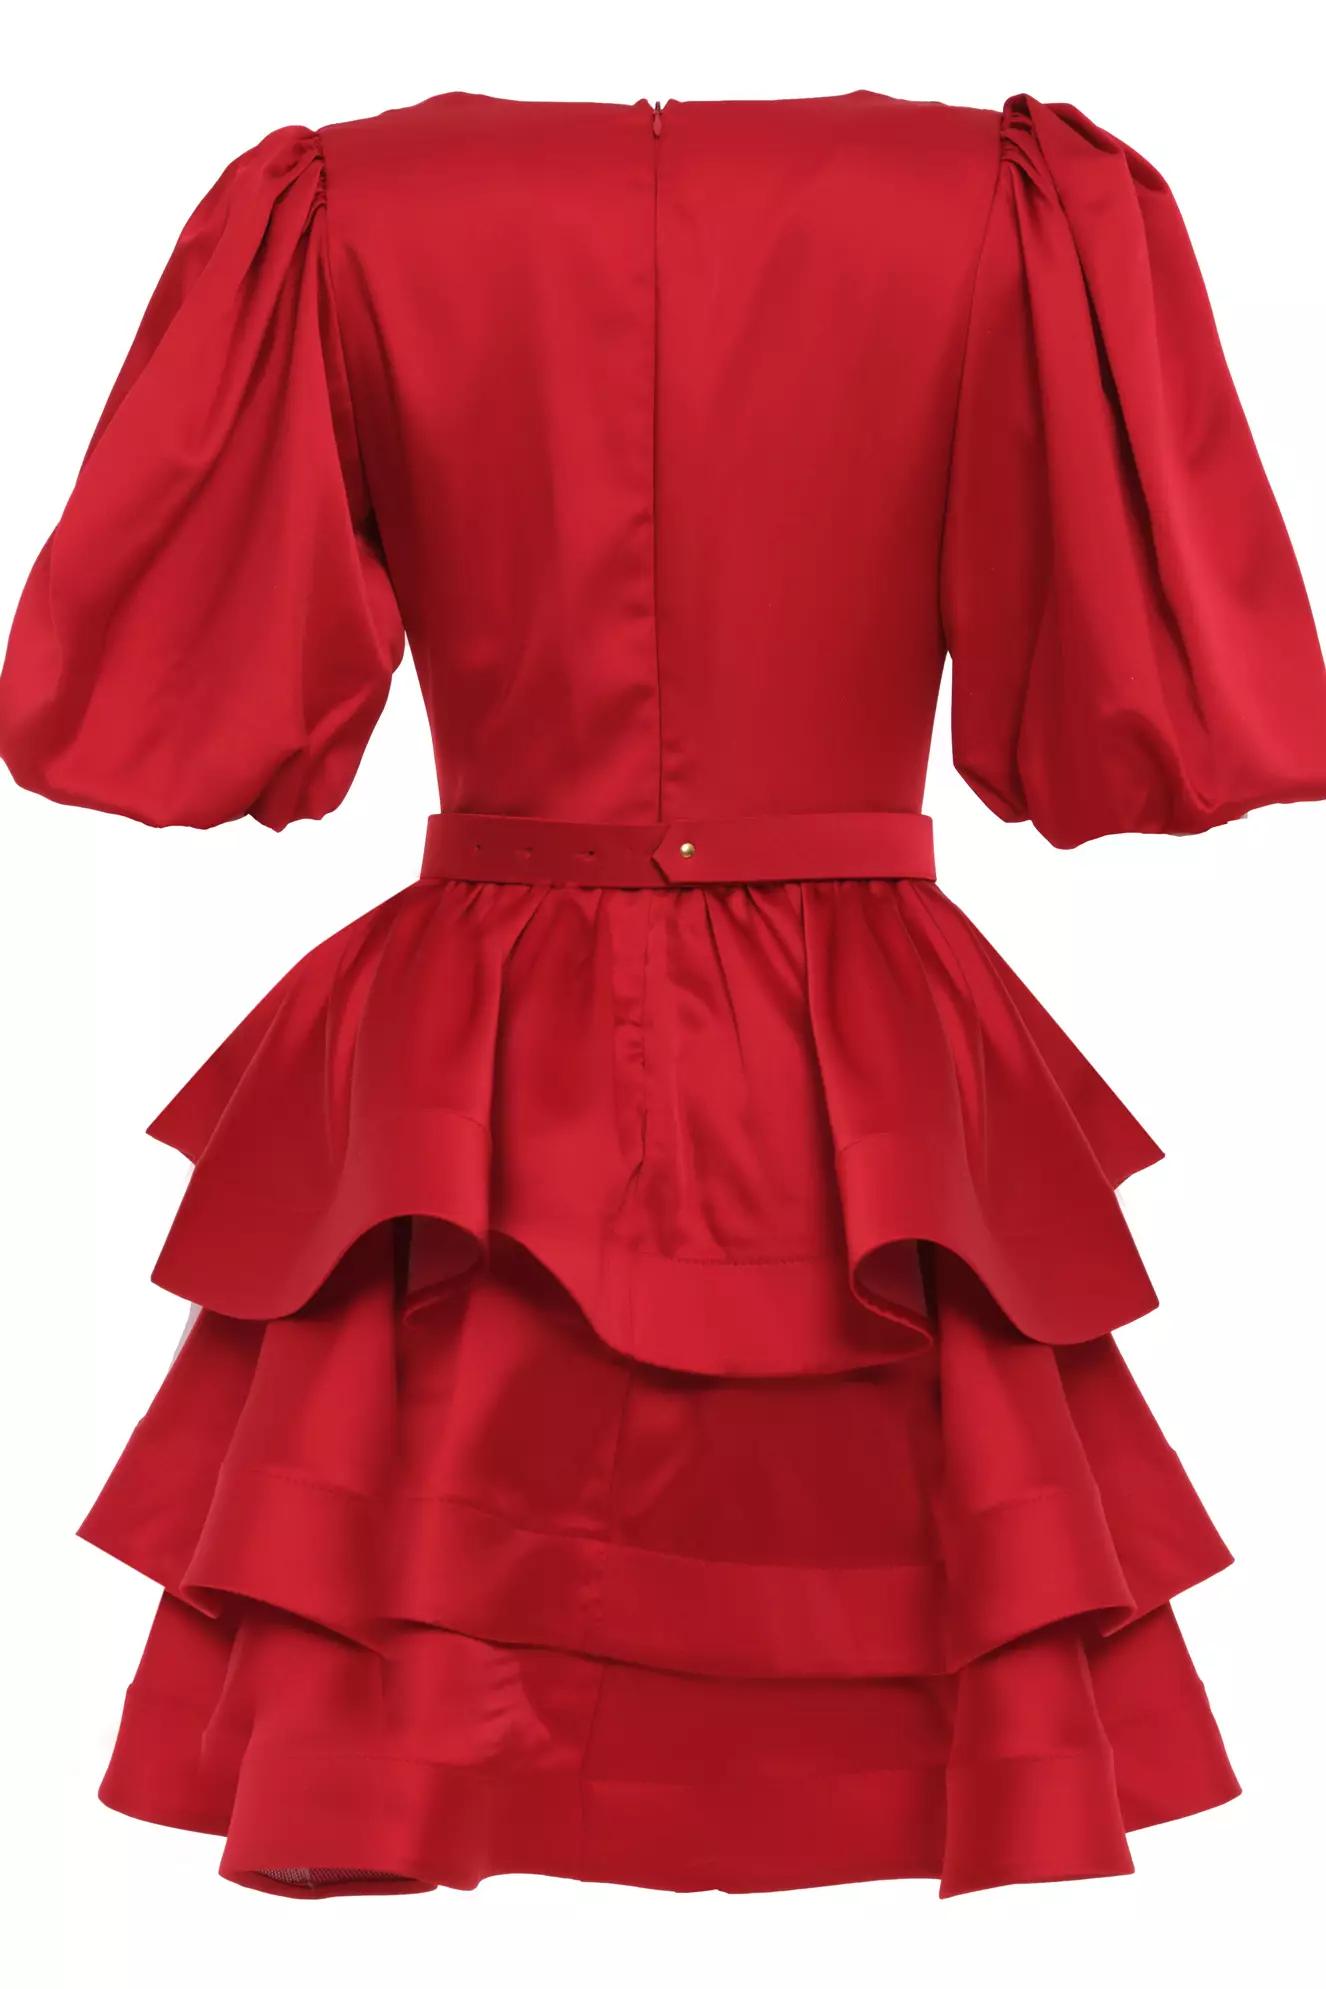 Red satin kapri kol mini dress